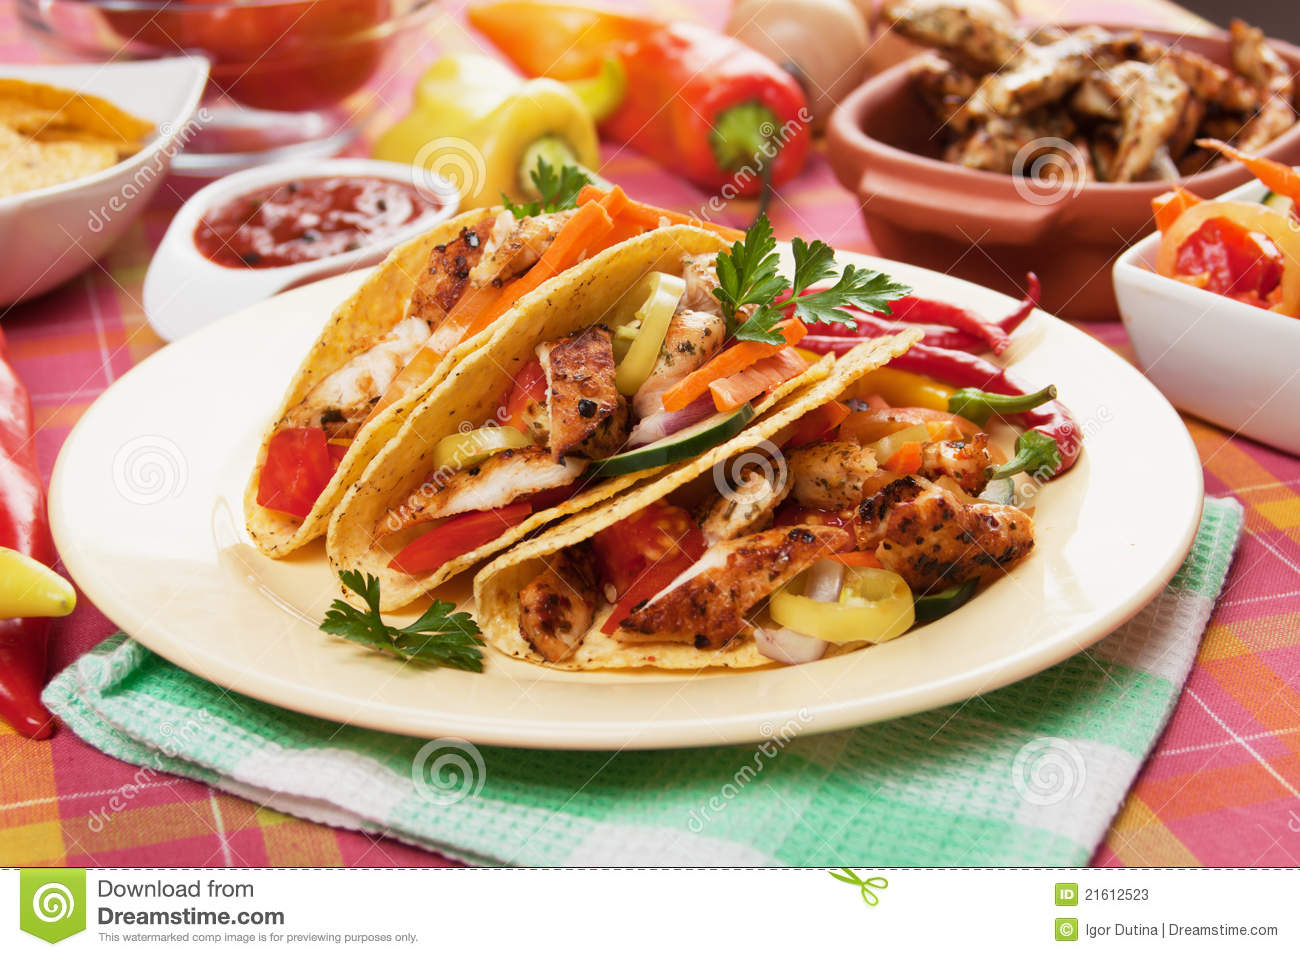 Chicken Salad In Taco Shells Stock Photos   Image  21612523